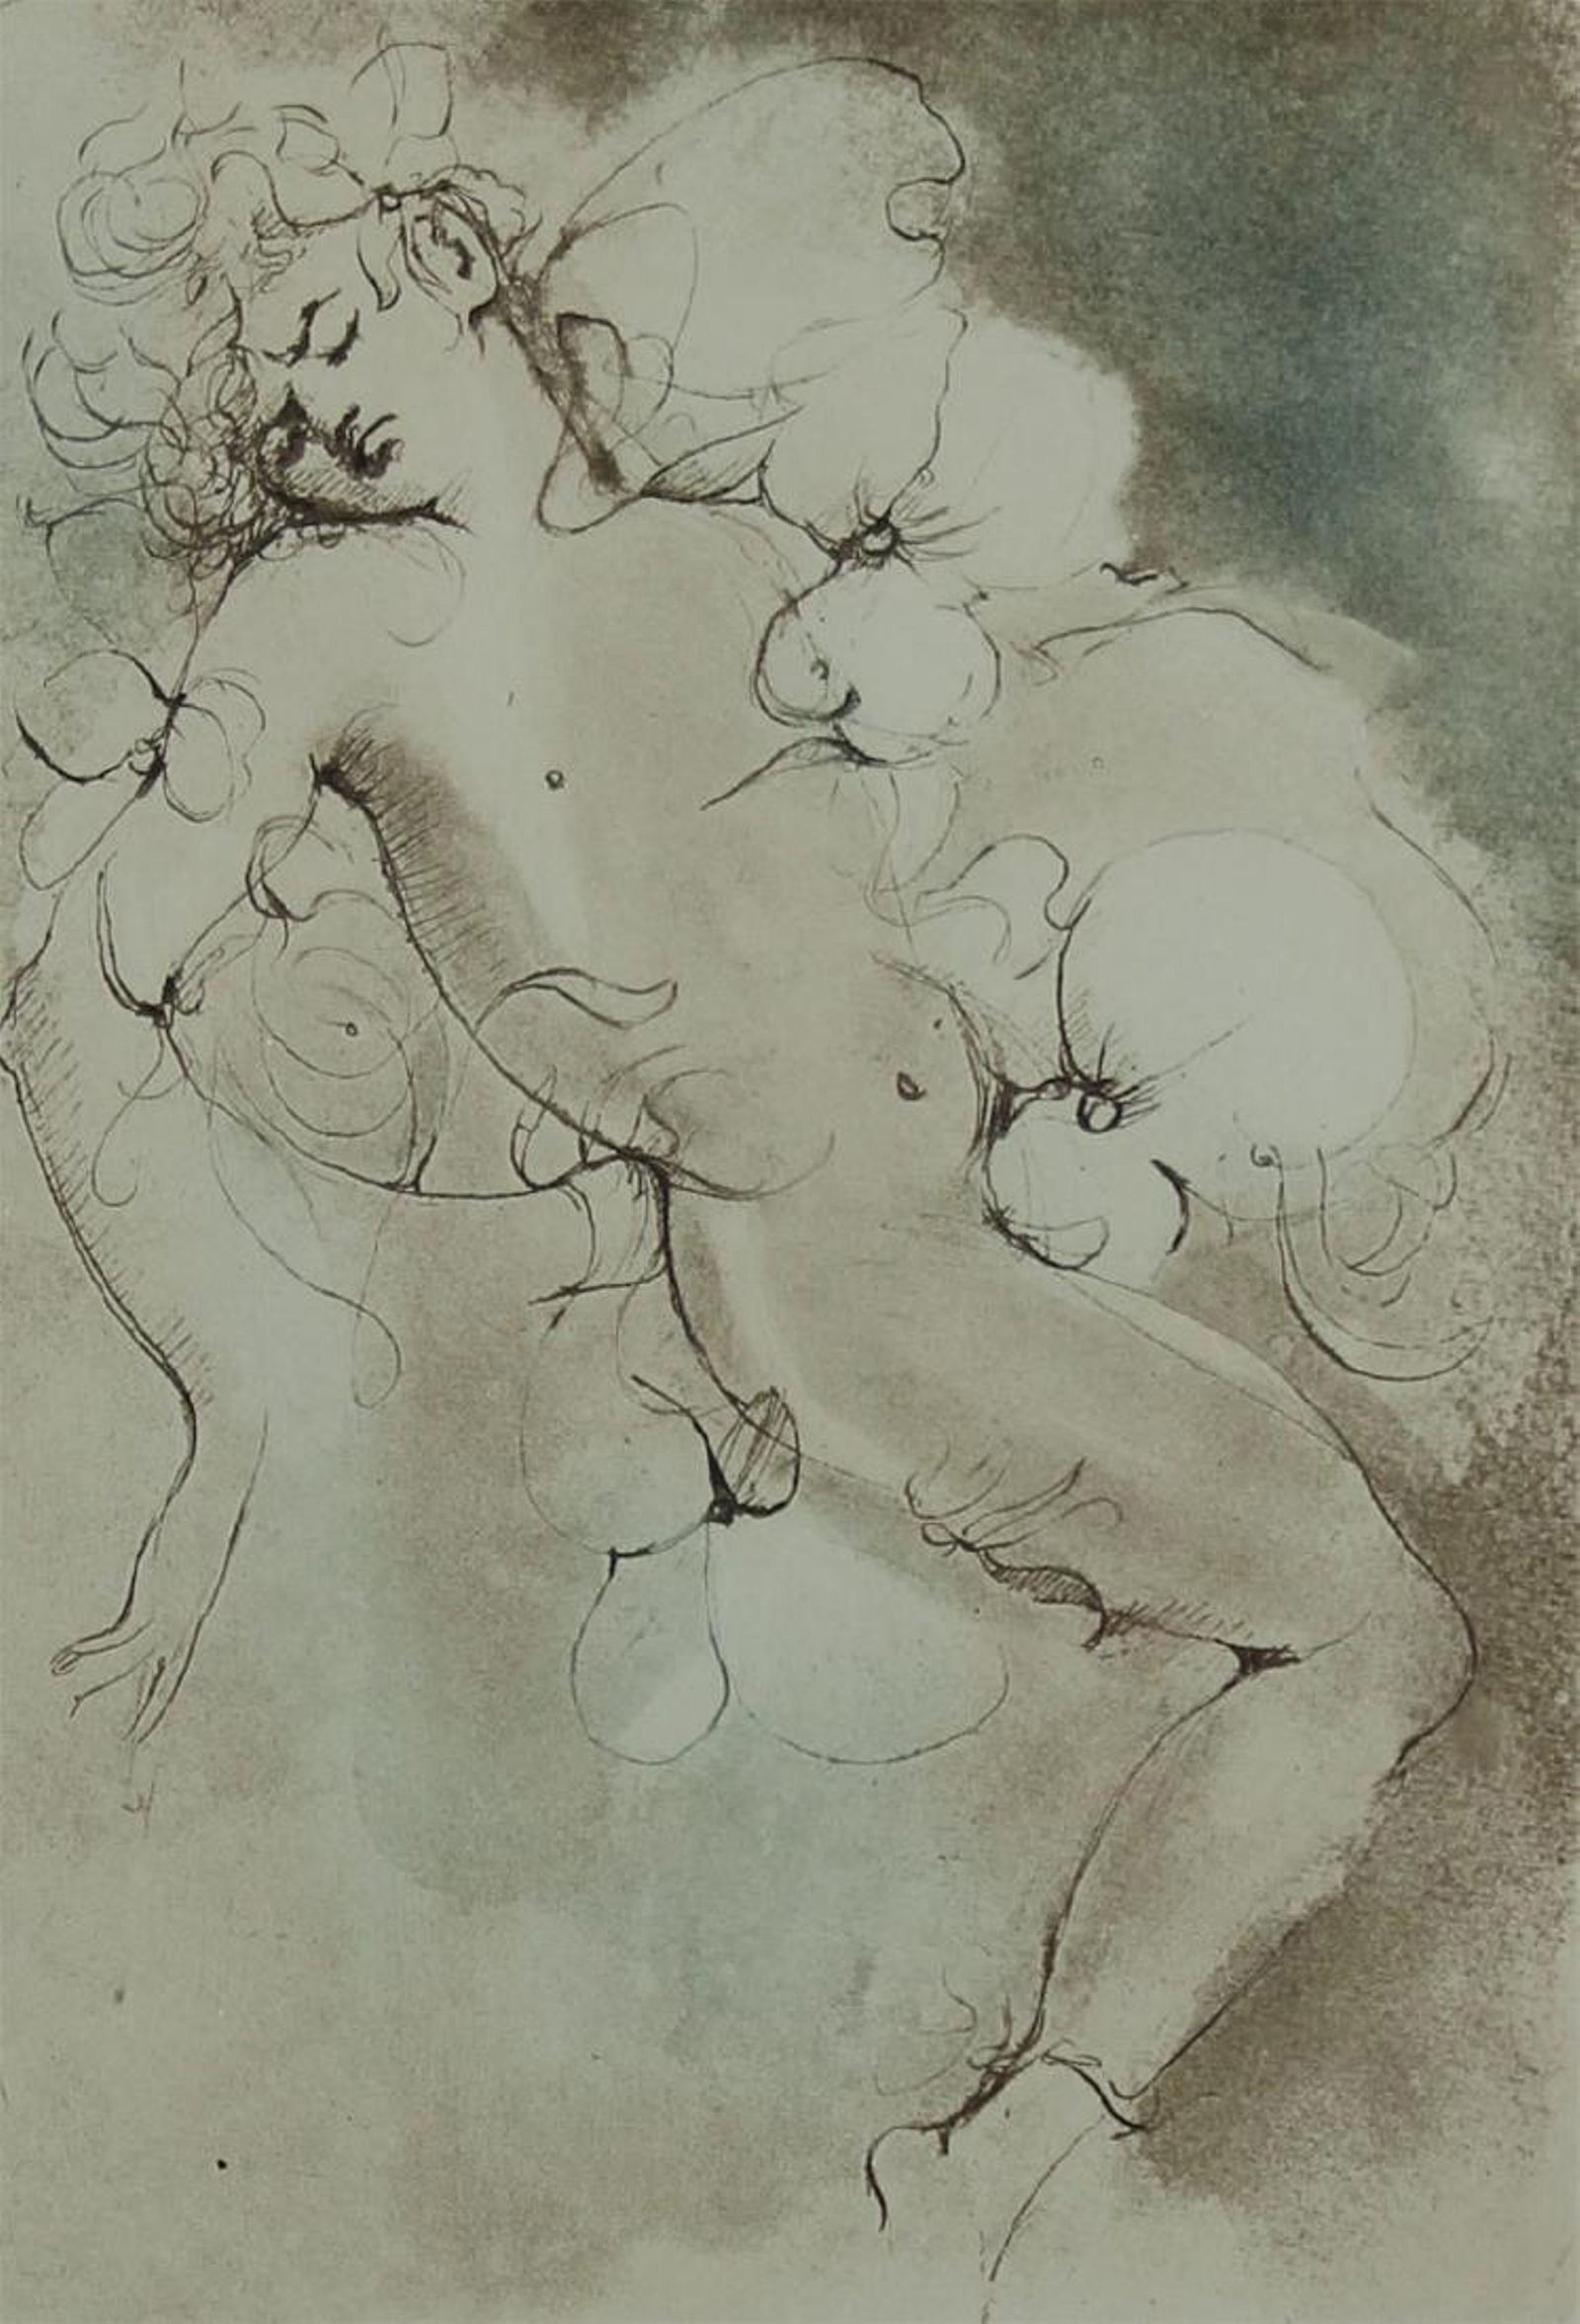 Untitled Implied Erotic Scene by Leonor Fini